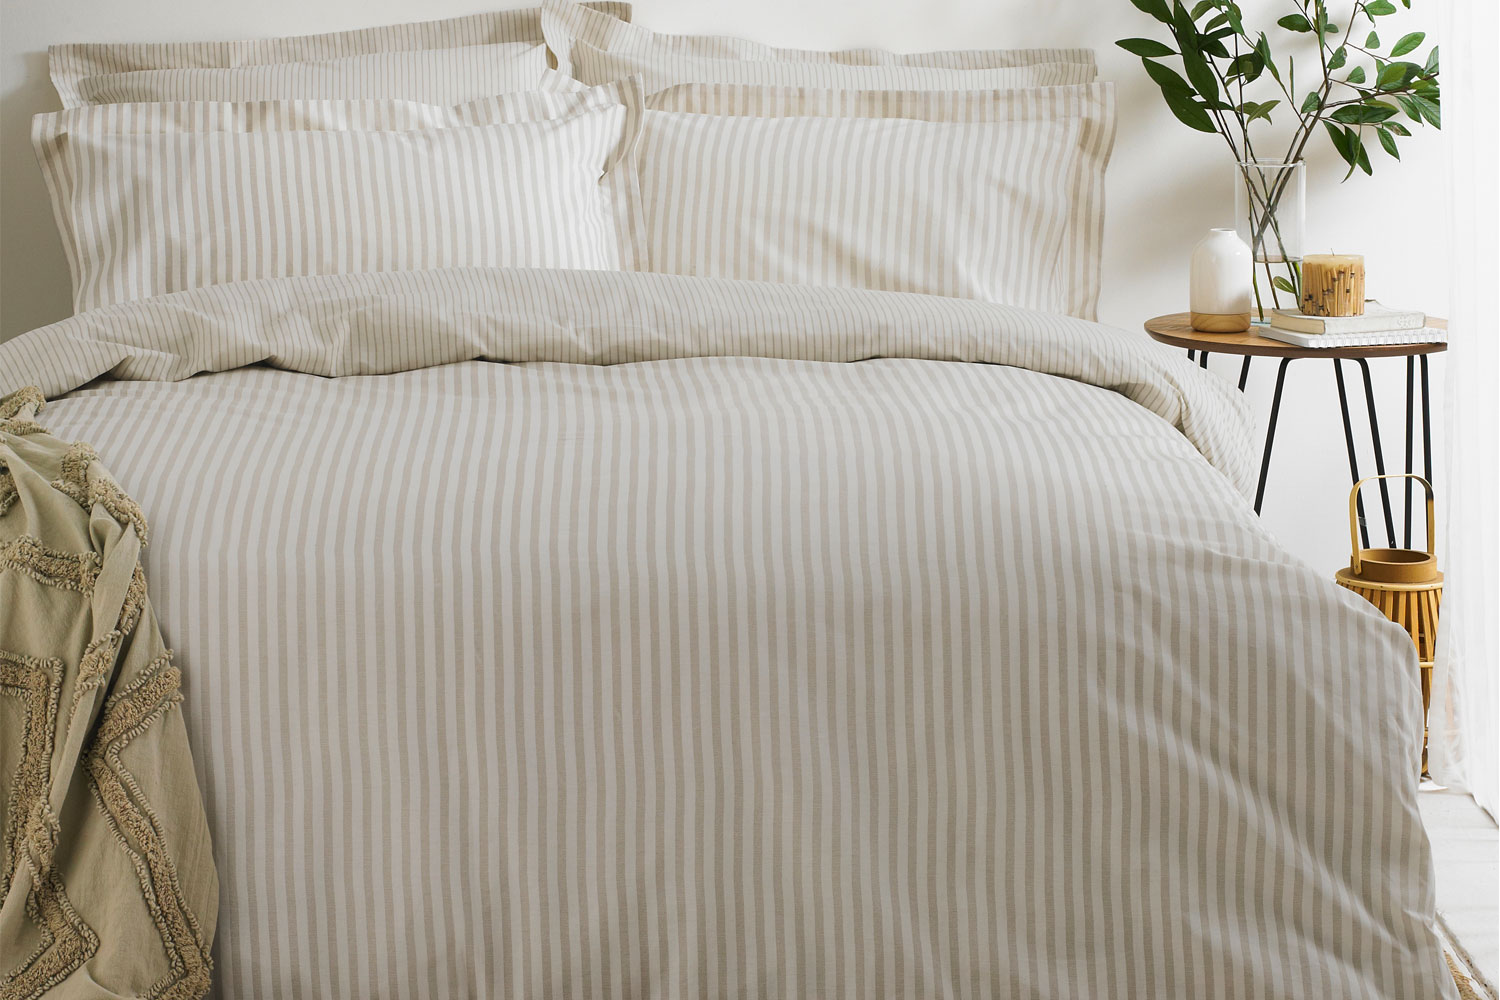 4 BED SHEET GRIPS..... cots double single super king size linen bedroom braces 